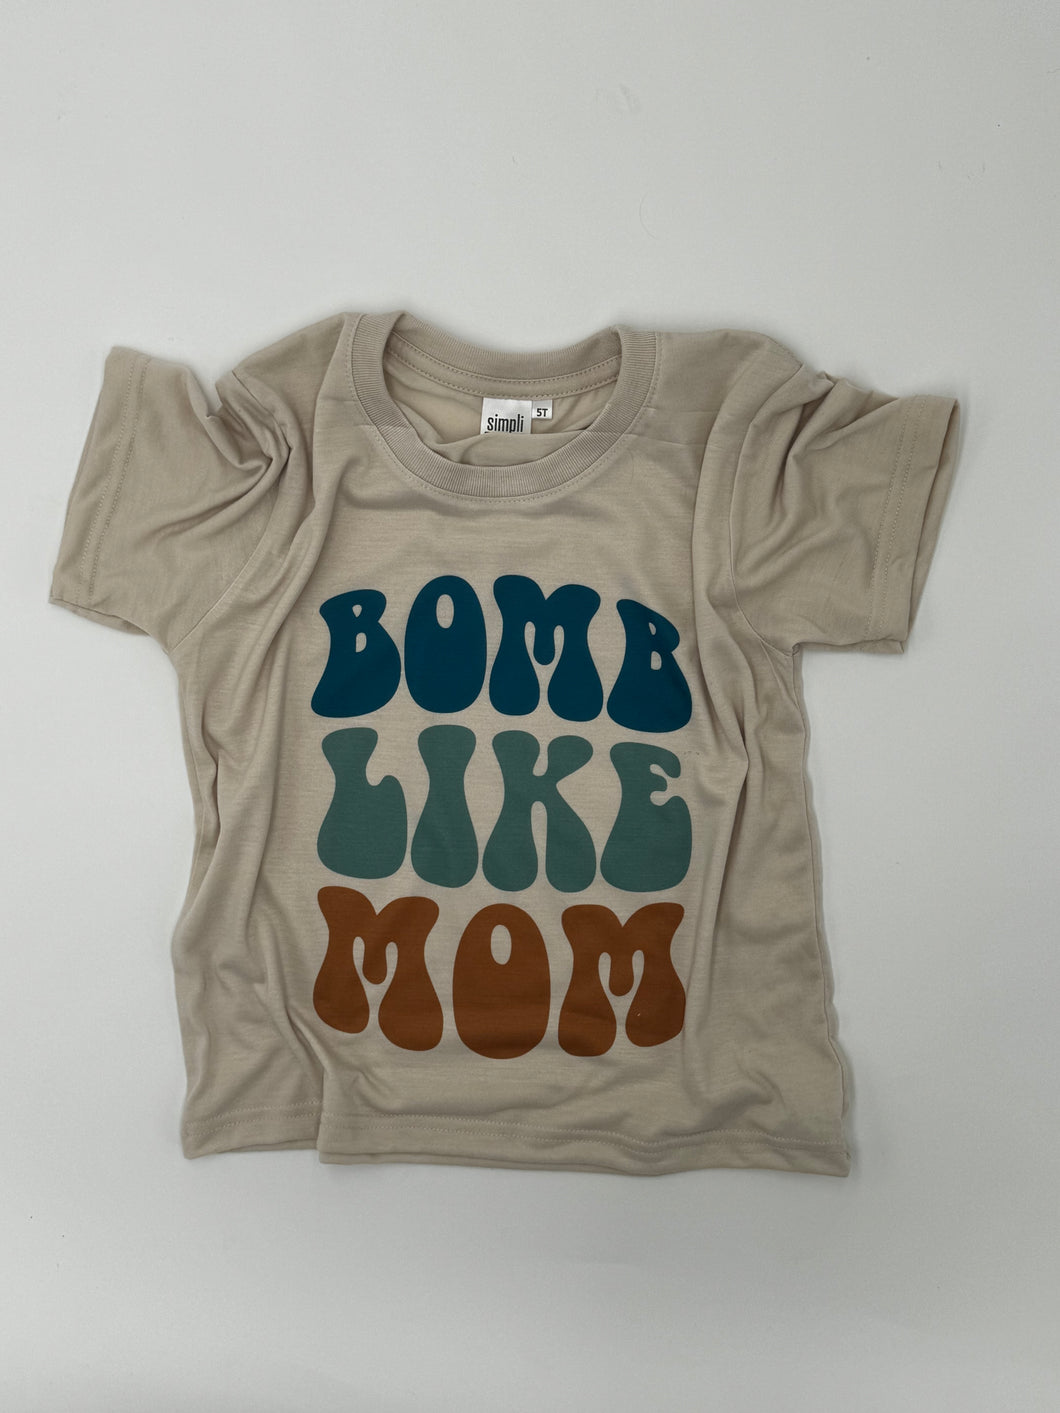 Bomb like mom